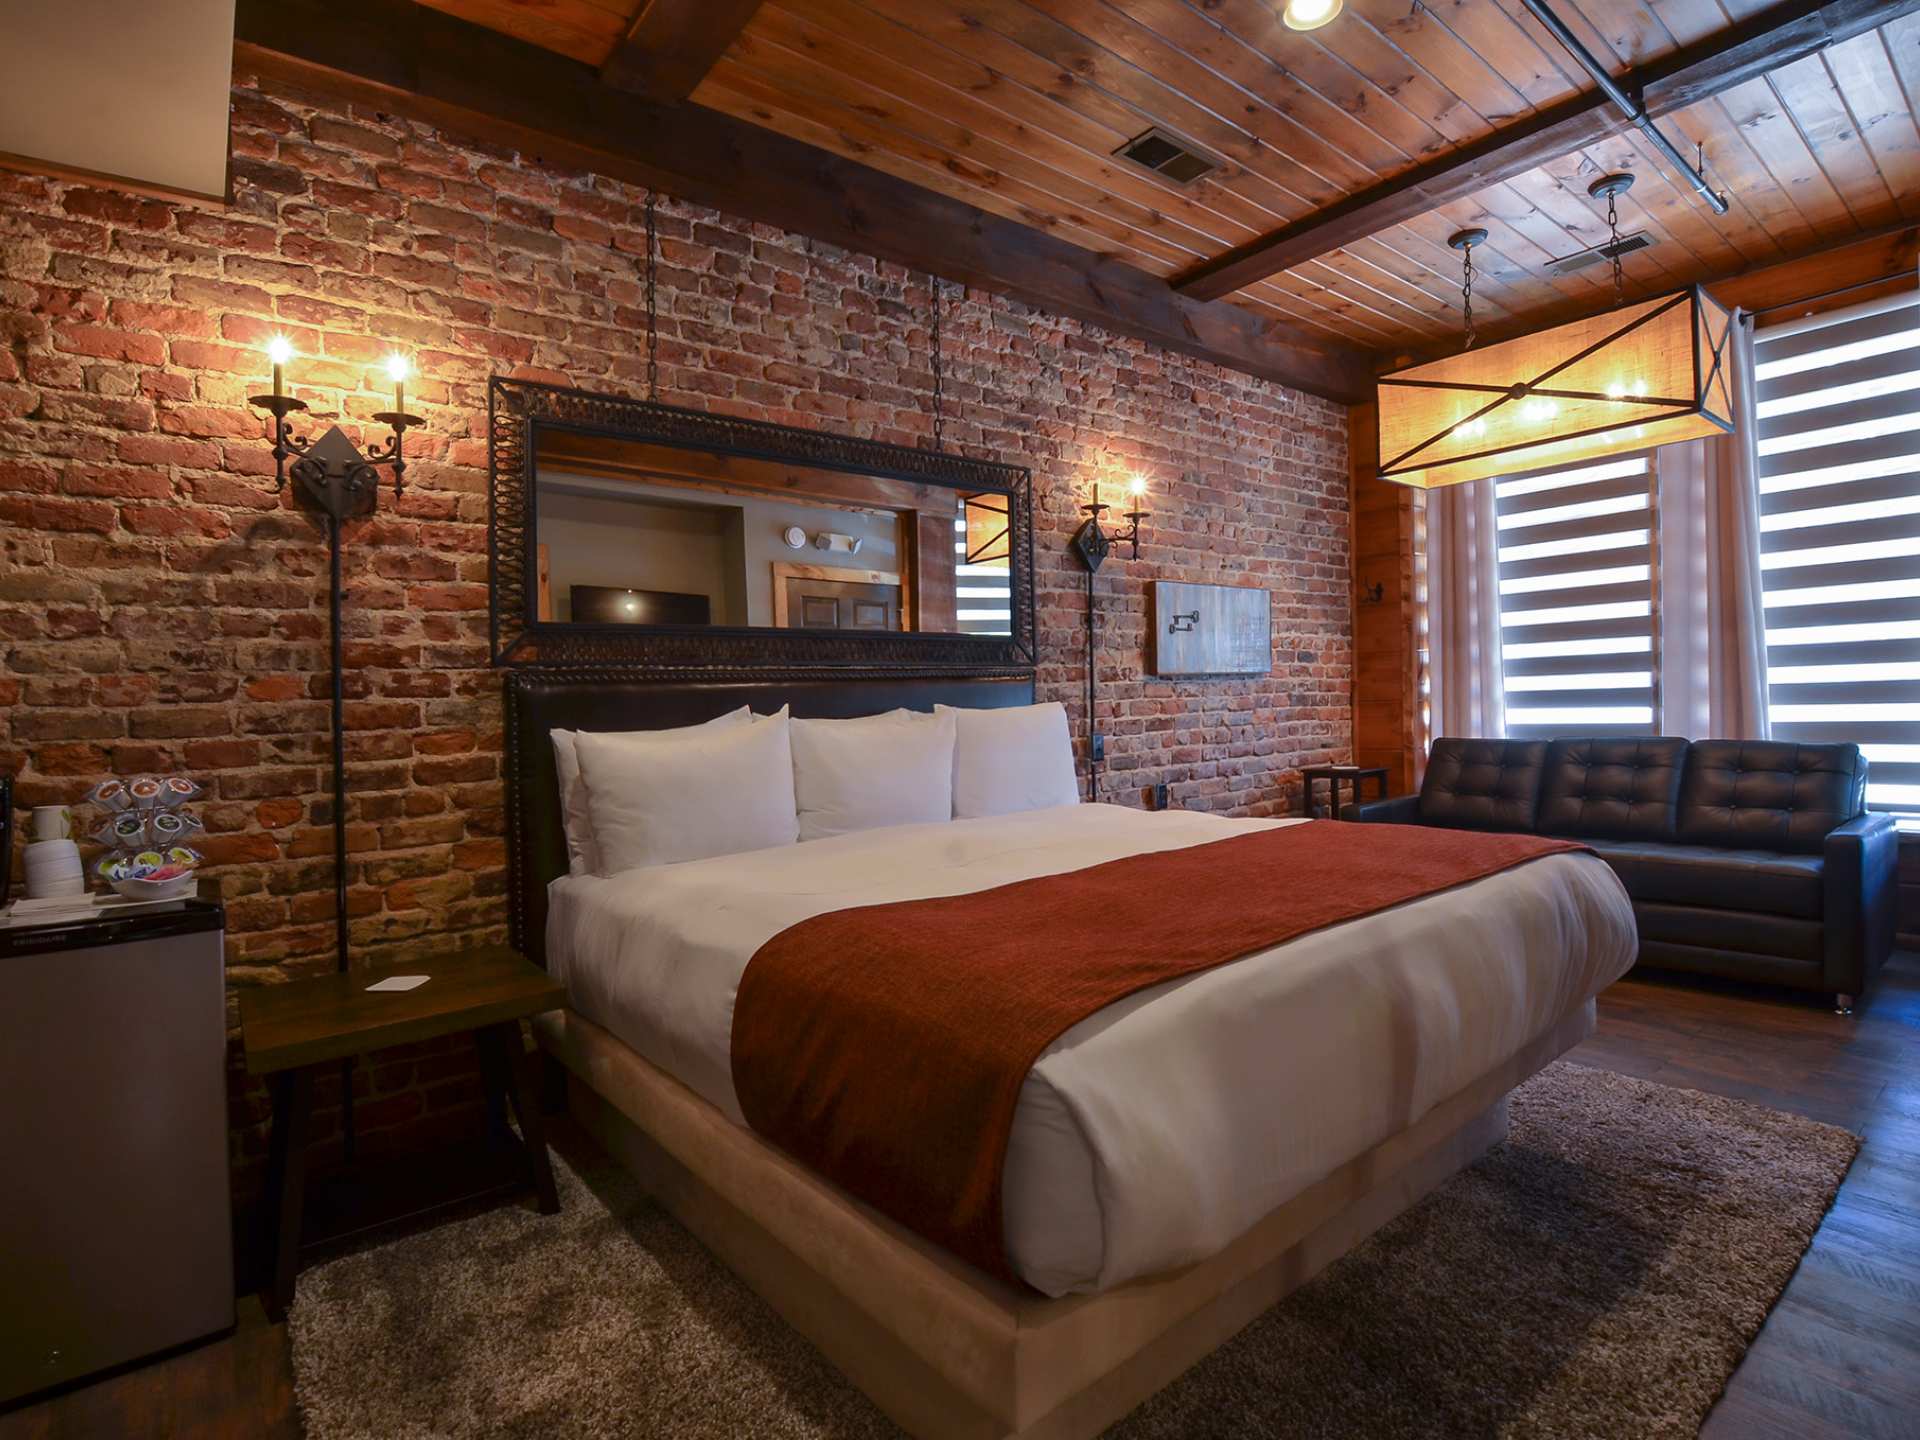 North Carolina | A bed at The Everett Hotel in Bryson City, North Carolina